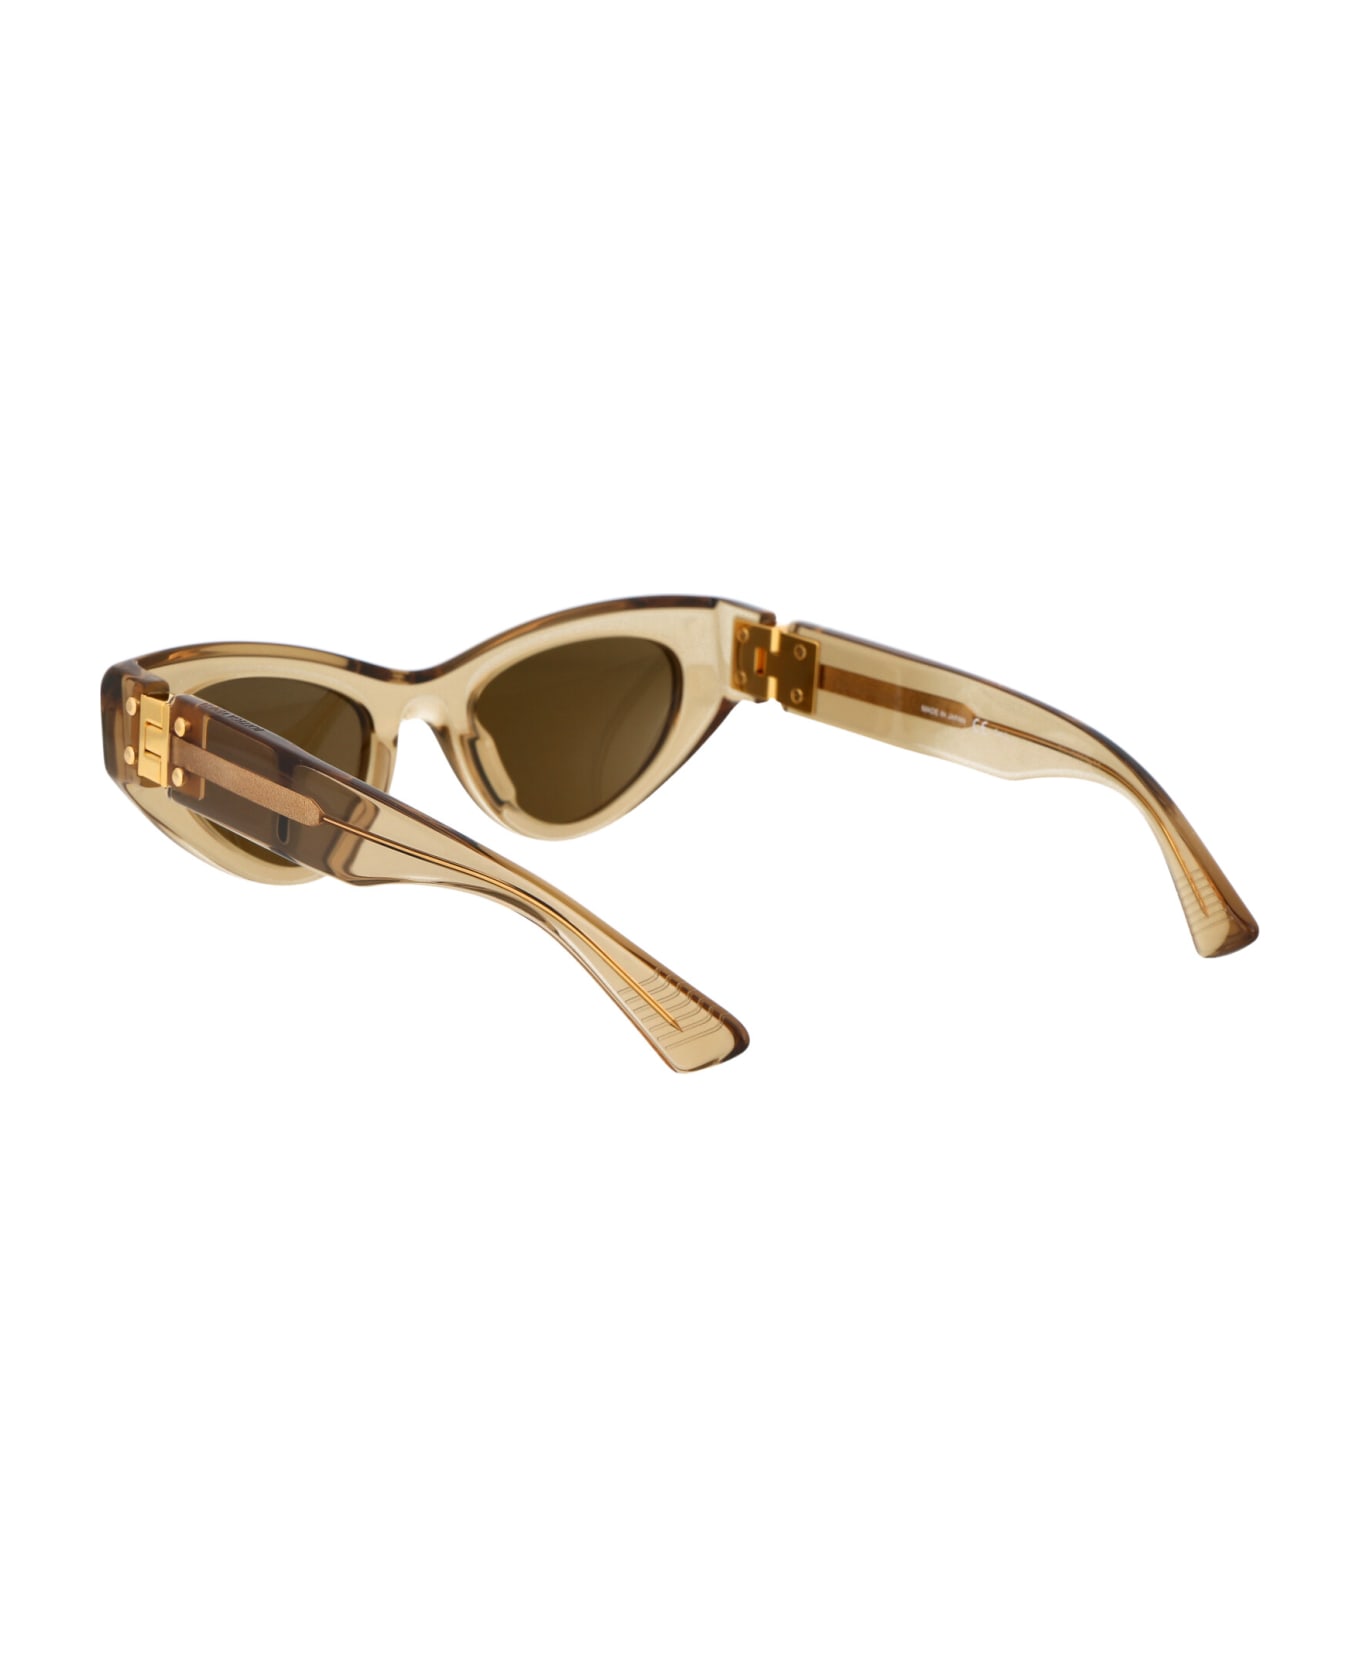 Bottega Veneta Eyewear Bv1142s Sunglasses - 003 BROWN BROWN BRONZE